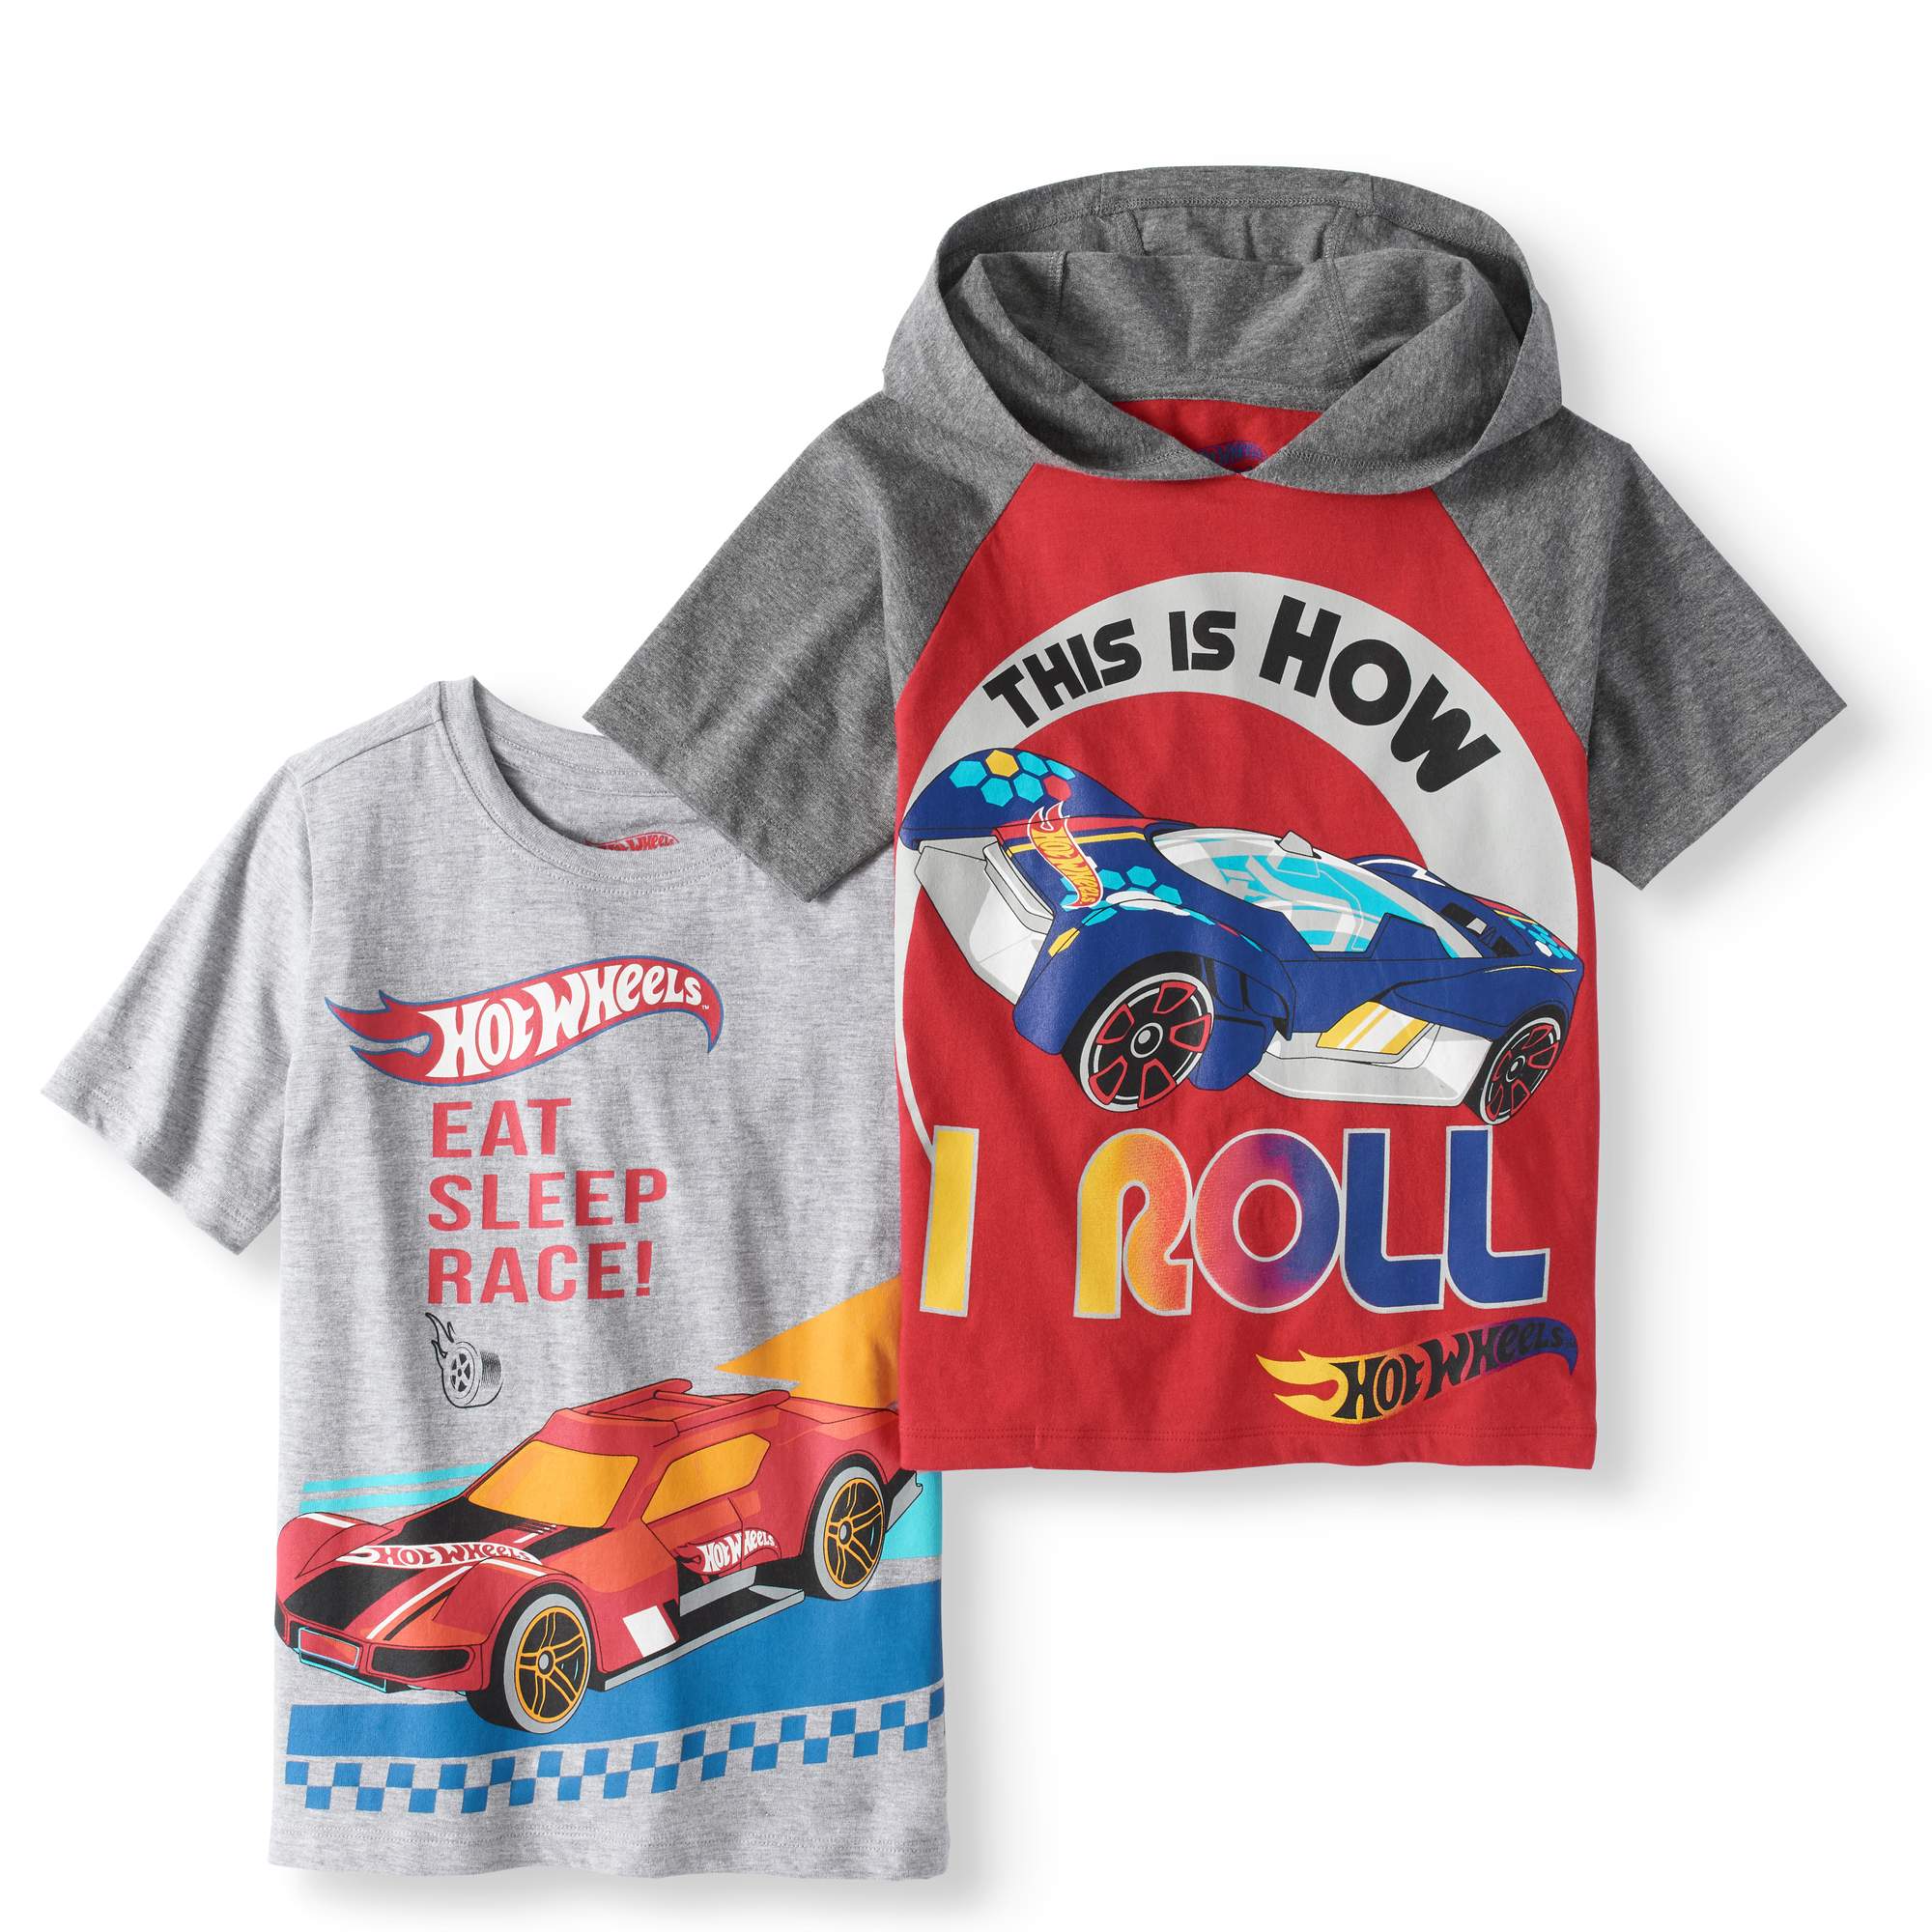 Hot Wheels How I Roll Hoodie T-Shirt & 'Eat, Sleep, Race' T-Shirt, 2-Pack Set (Little Boys) - image 1 of 3